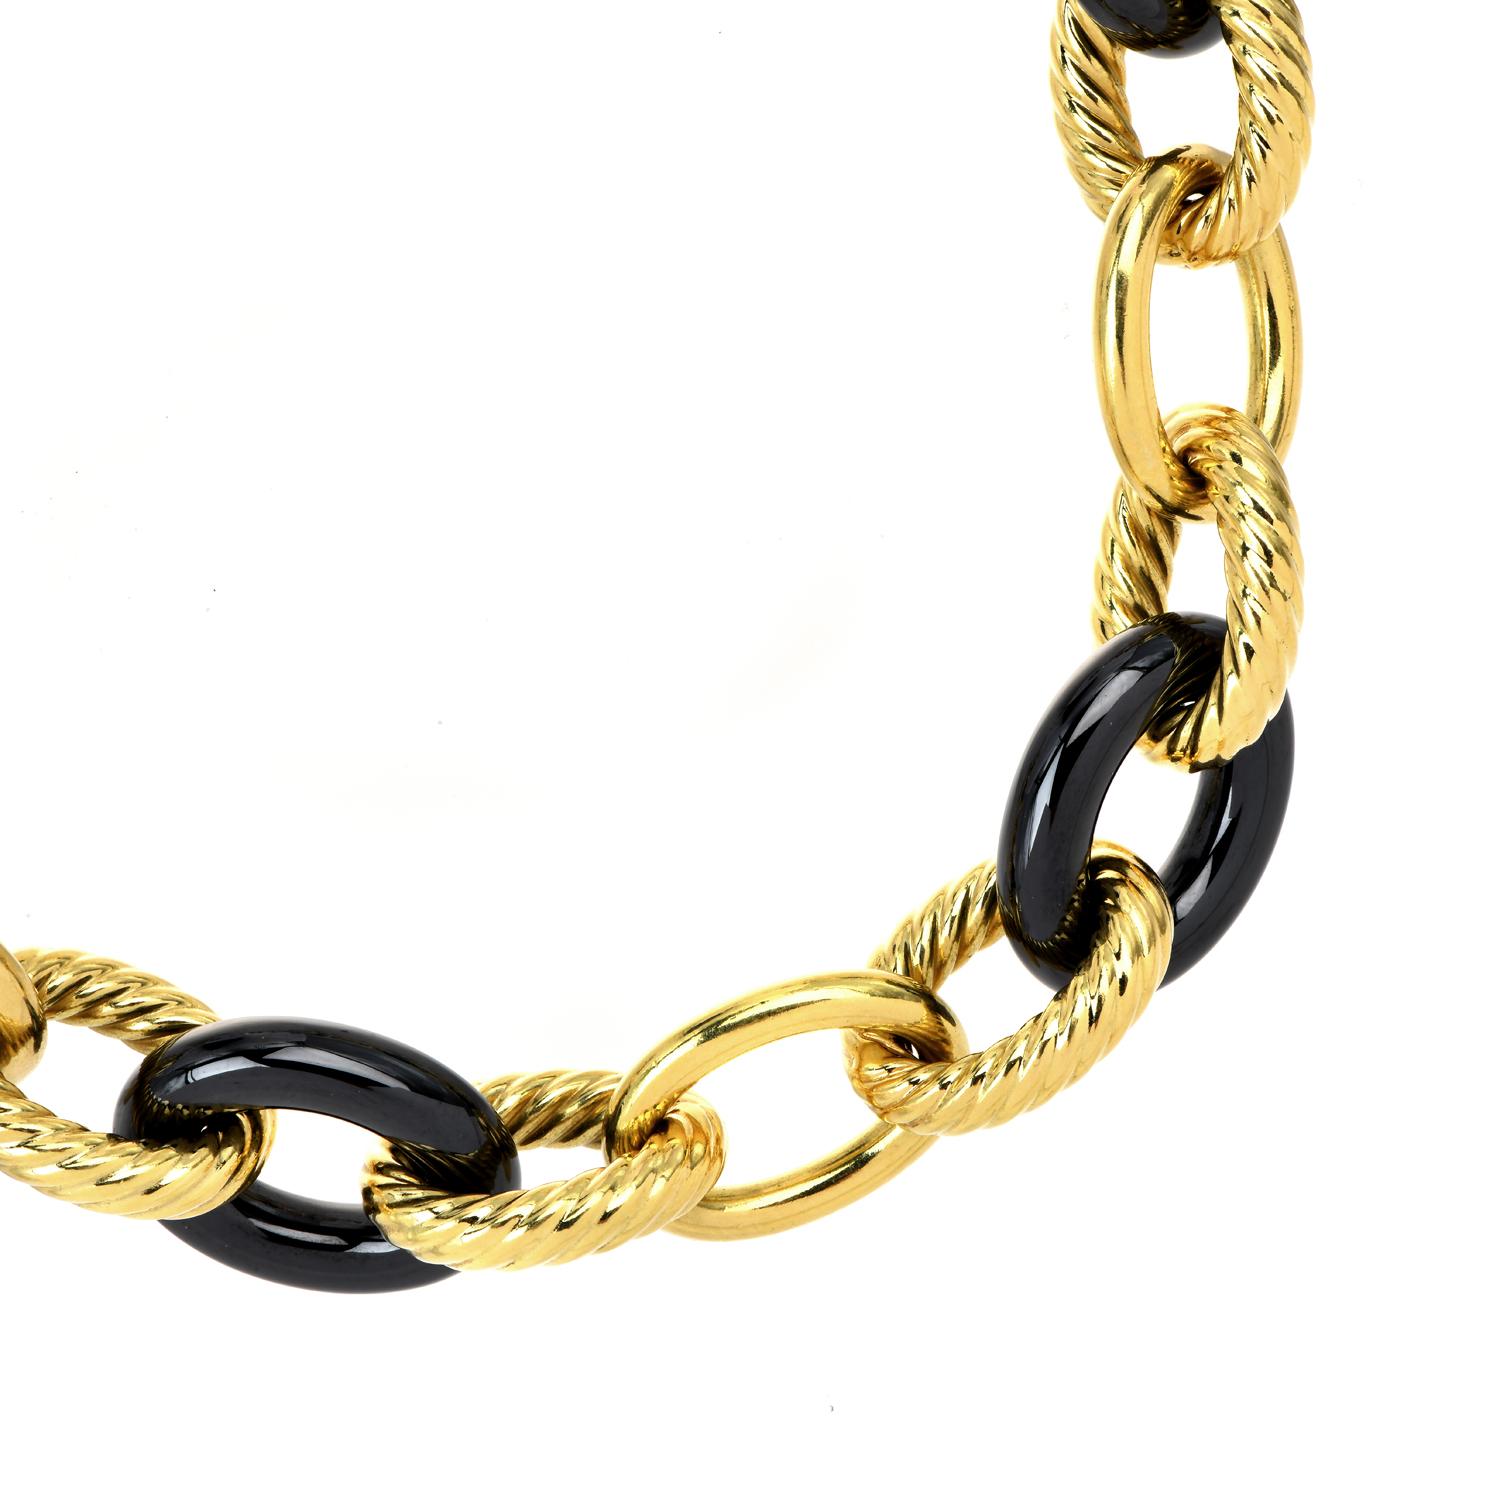 Uncut David Yurman 18K Yellow Gold Hematite 17 mm Large Link Chain Necklace For Sale